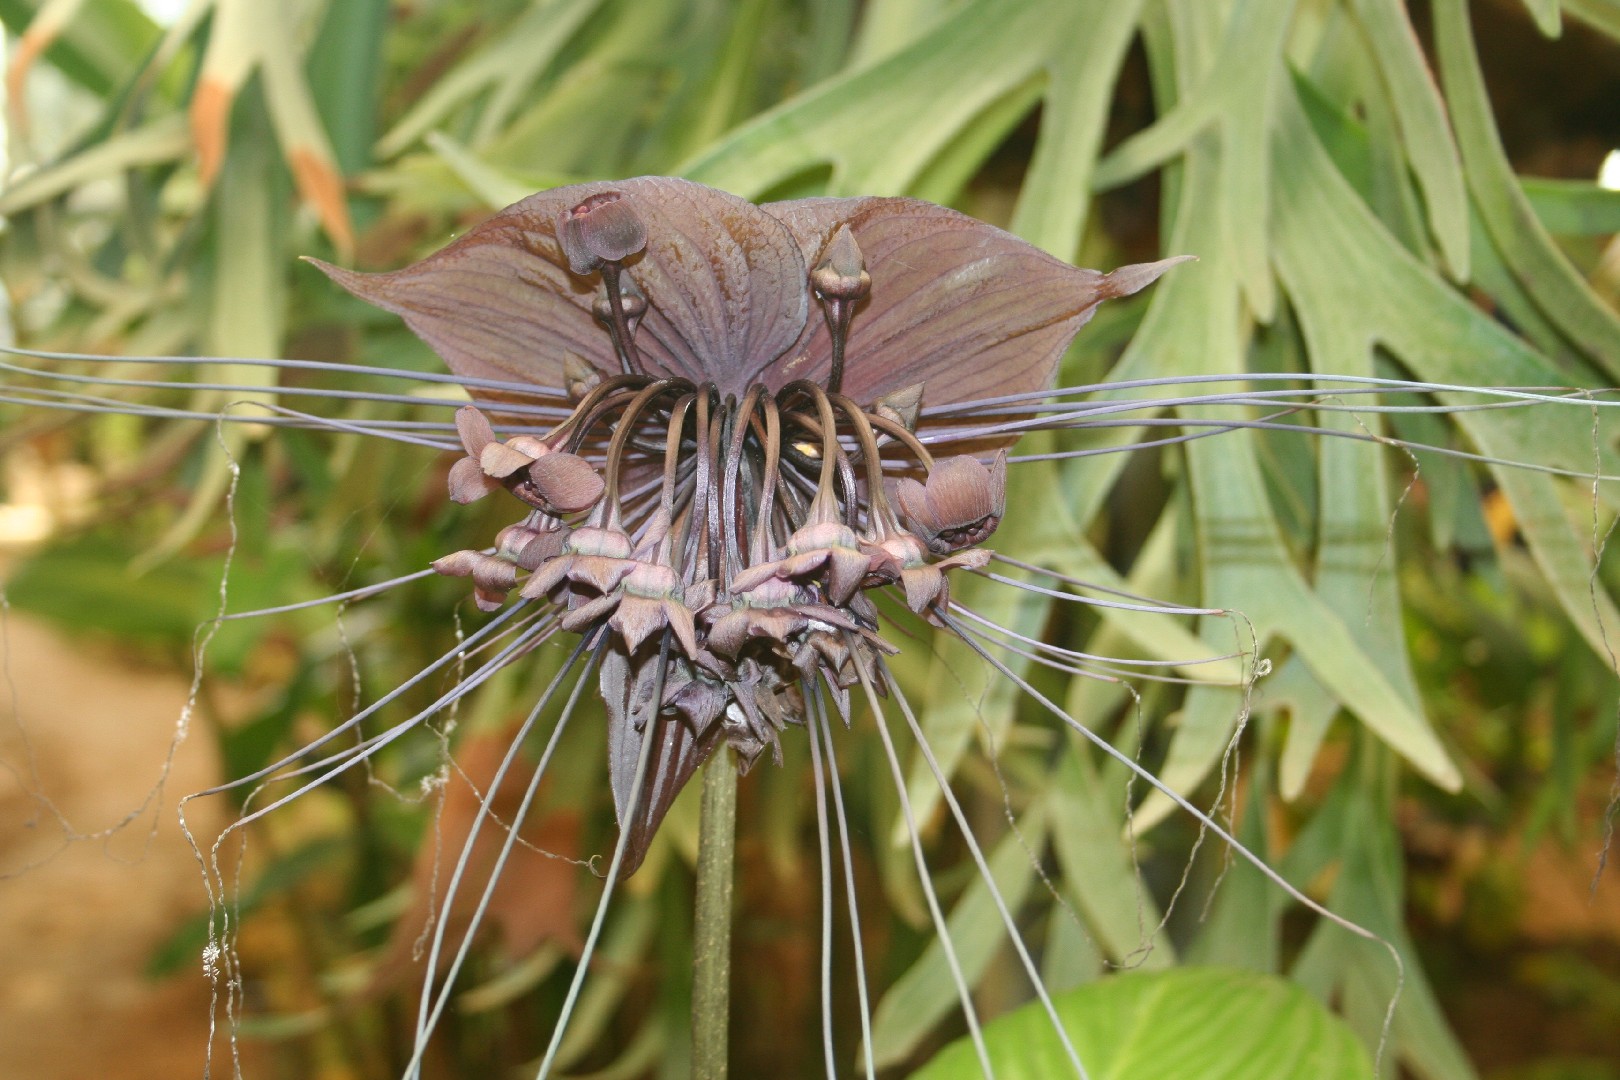 Black bat flower (Tacca chantrieri) Flower, Leaf, Care, Uses - PictureThis